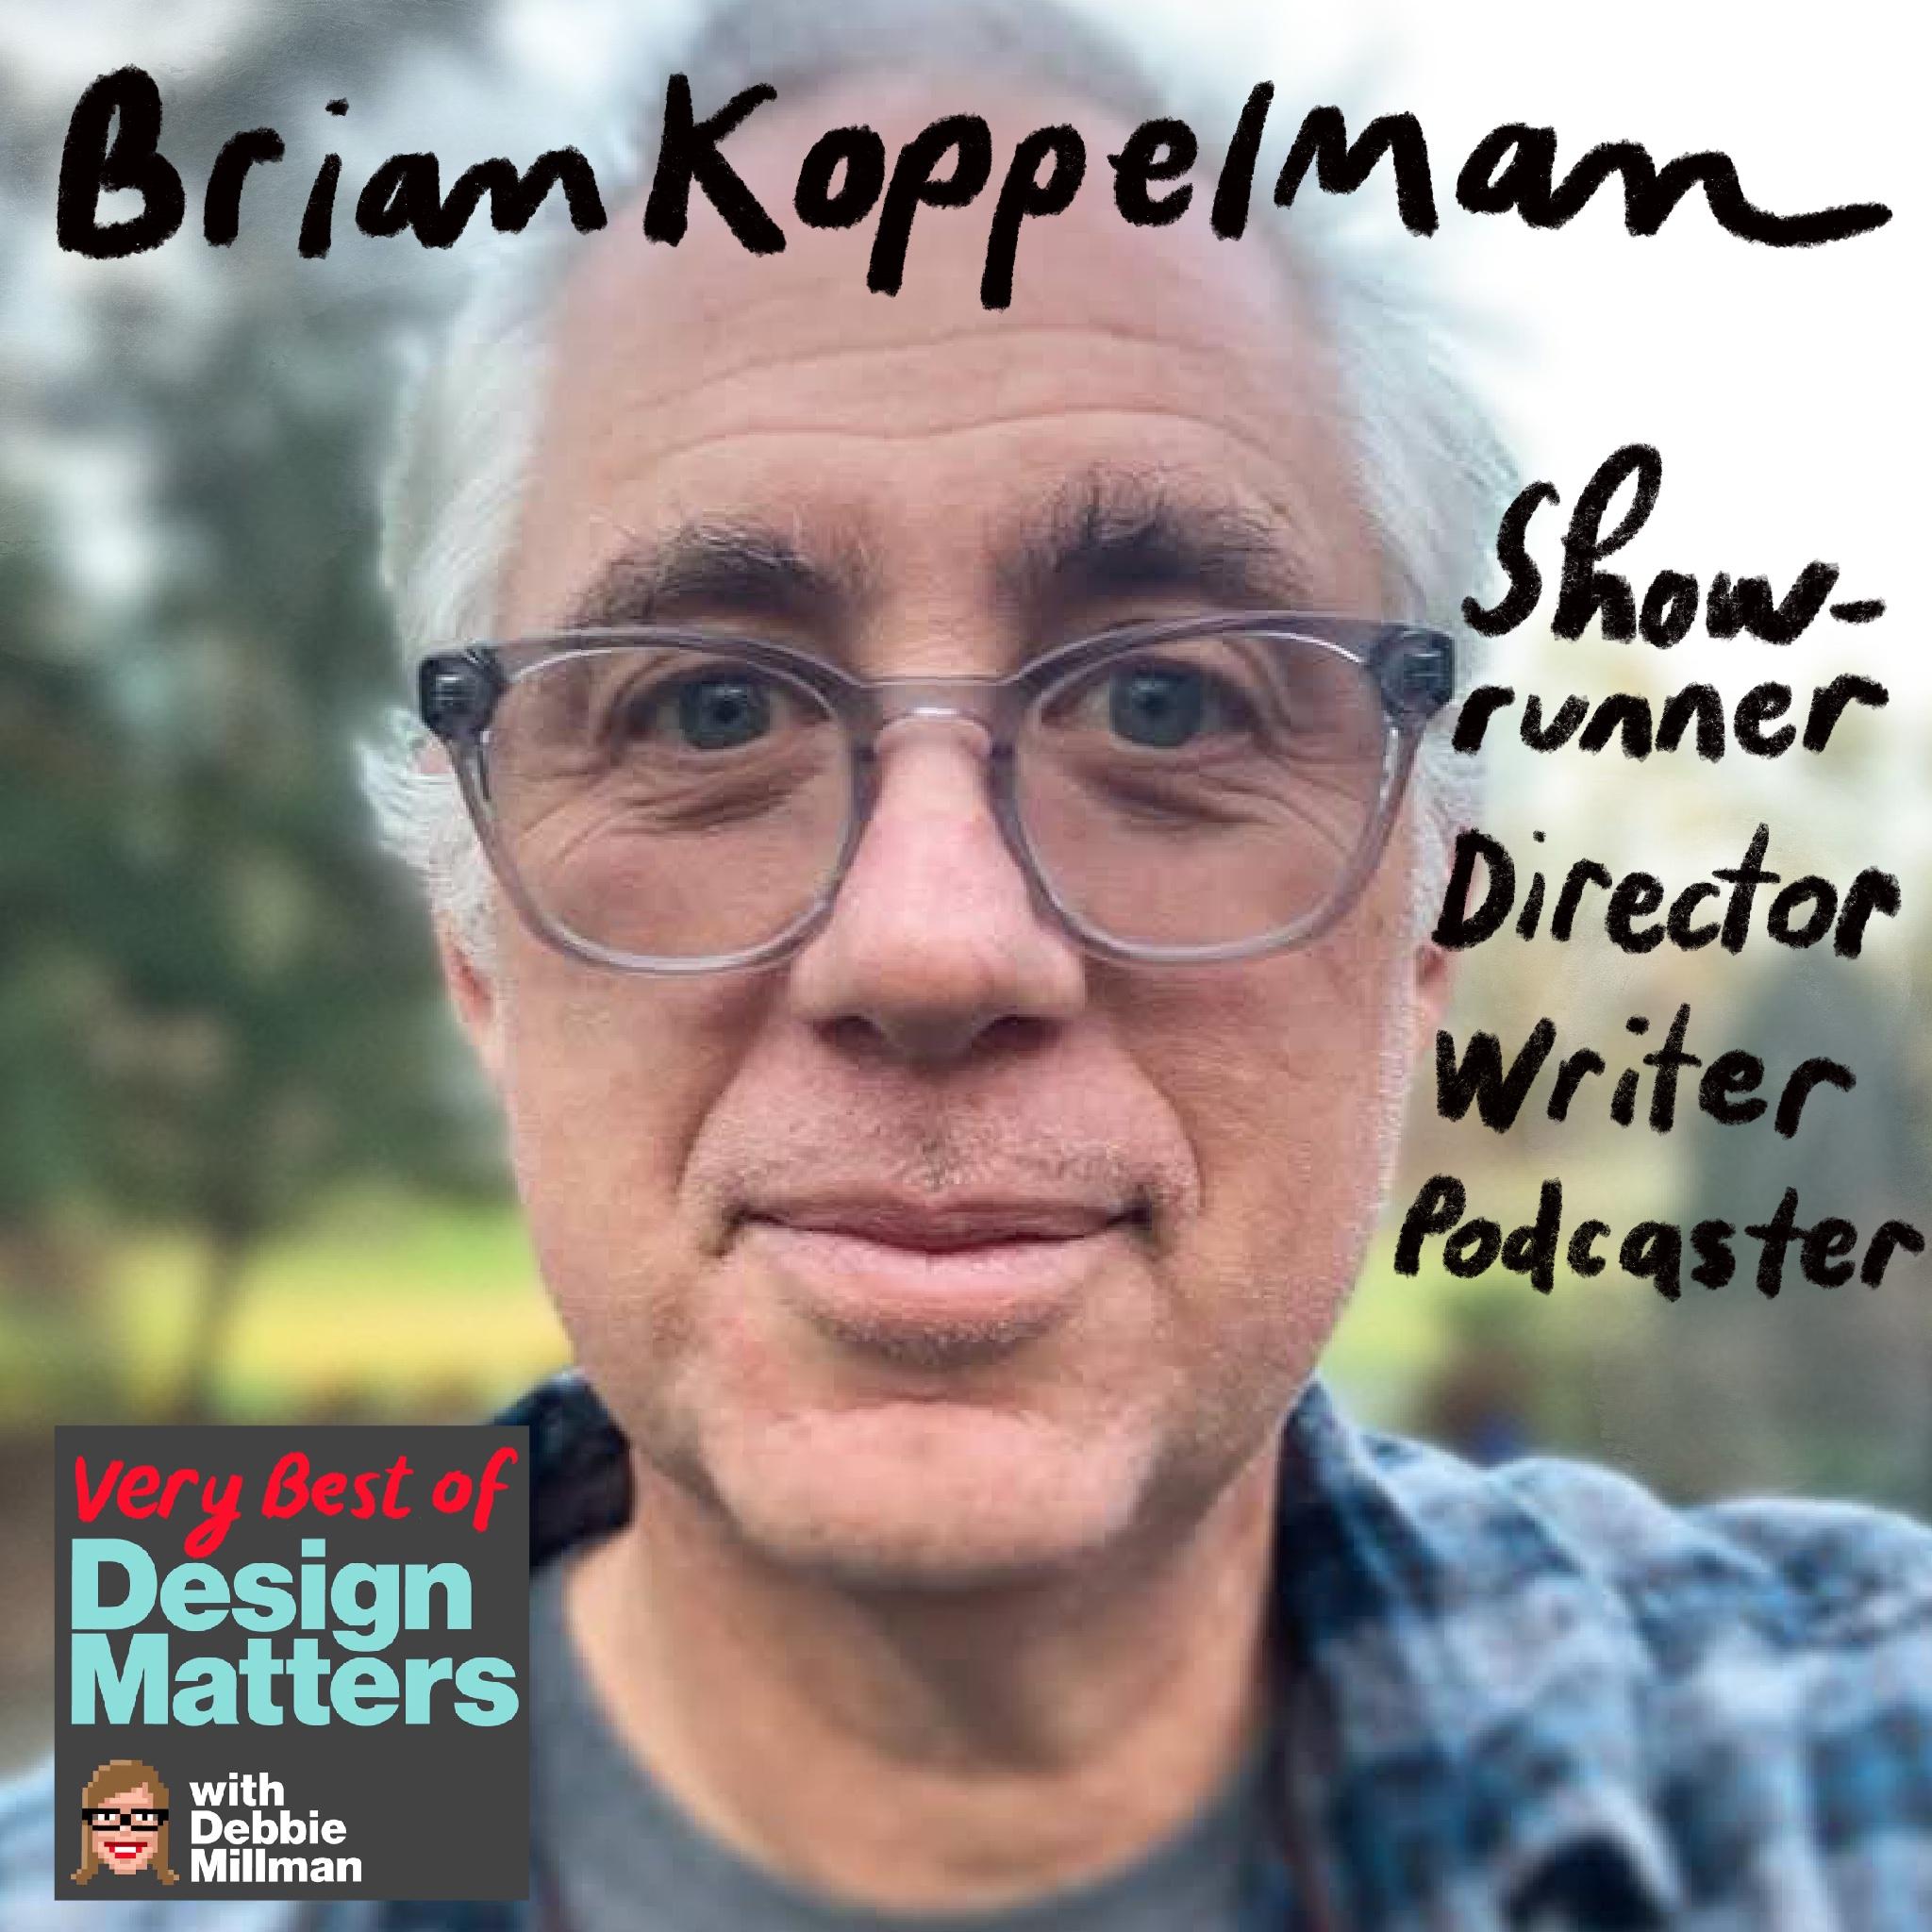 Thumbnail for "Best of Design Matters: Brian Koppelman".